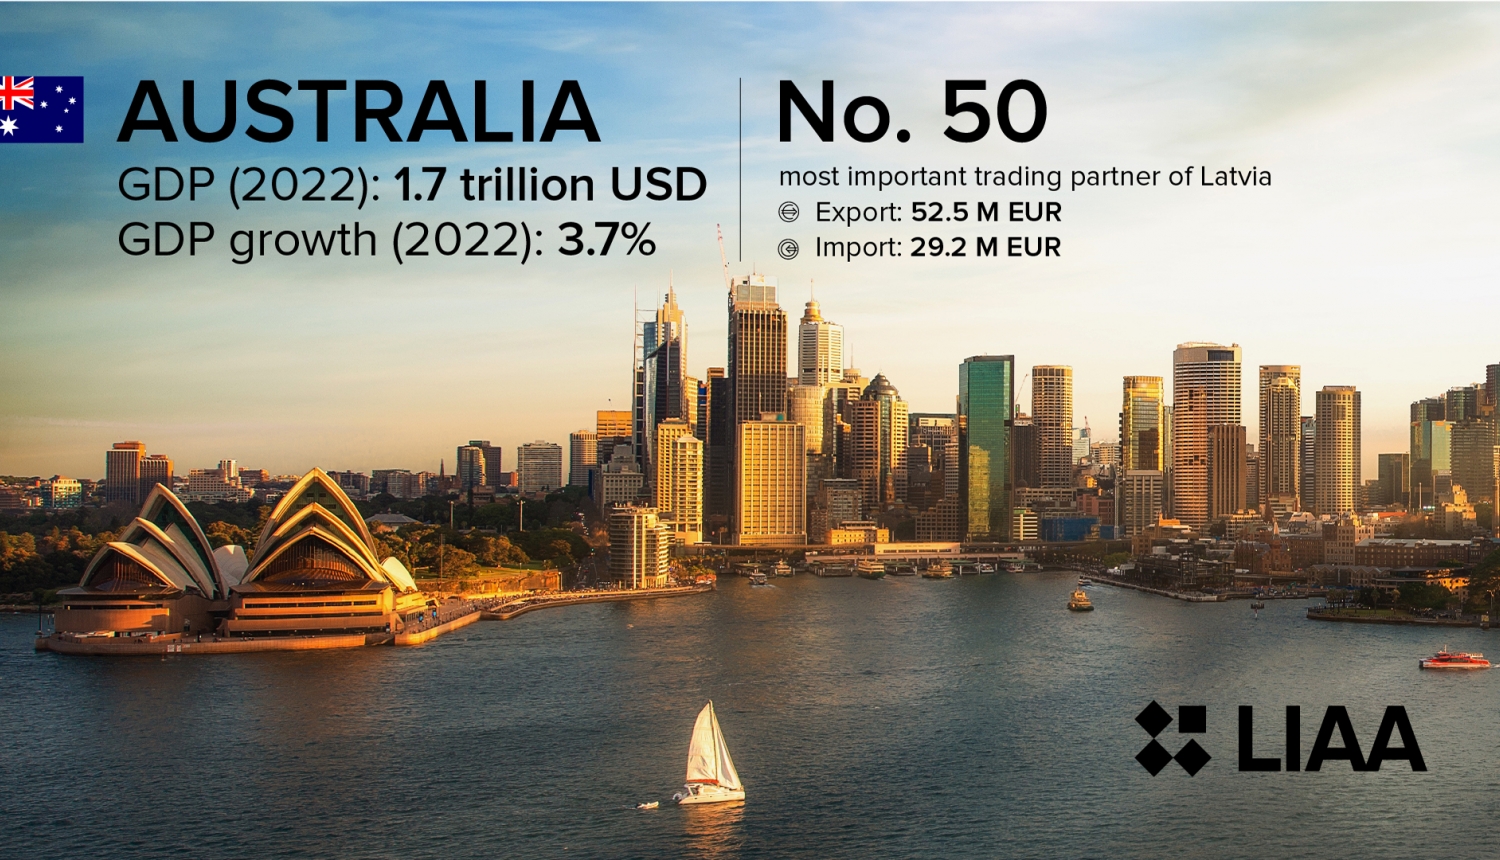 Destination Australia. An export market 14,000 kilometers away